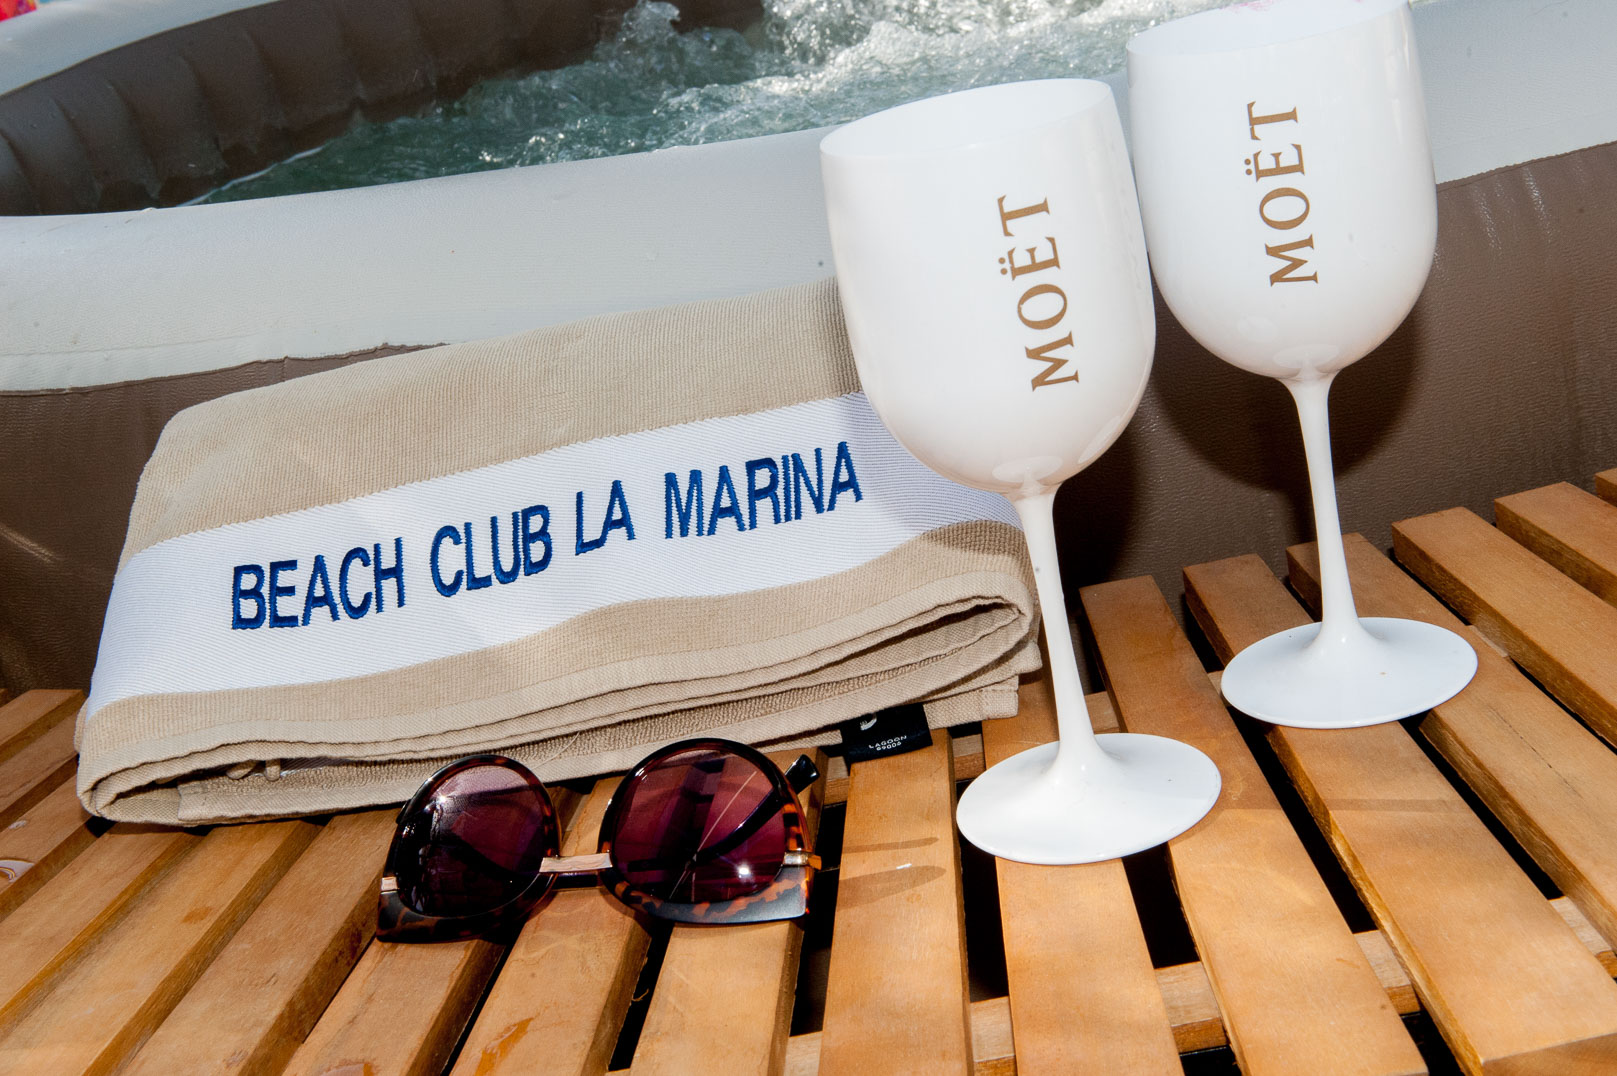 Beach Club La Marina - Palma, Fotograf: Mike Weiss